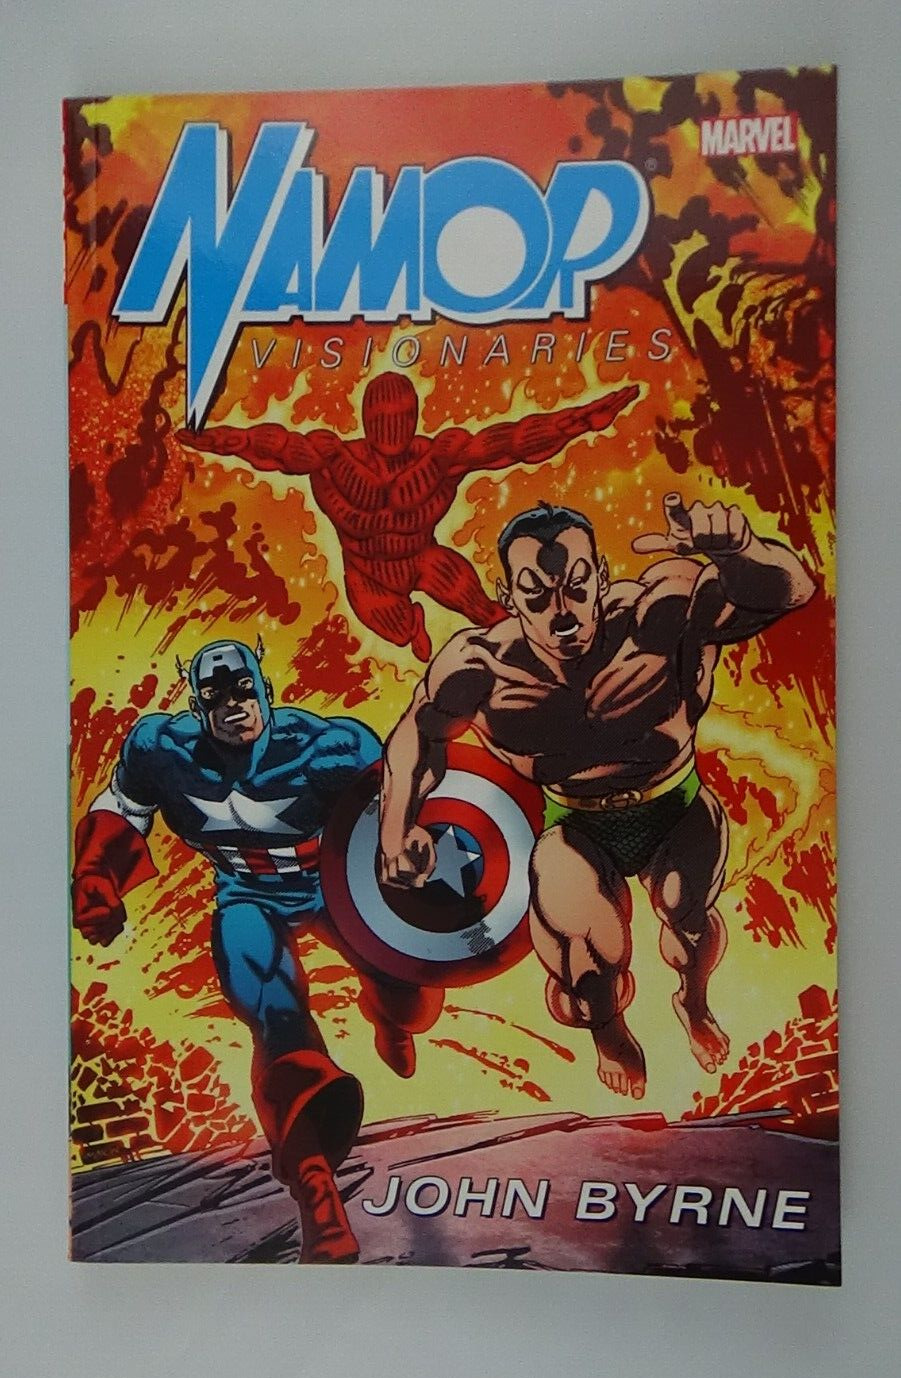 Namor Visionaries: John Byrne #2 (Marvel Comics August 2012) Paperback #011